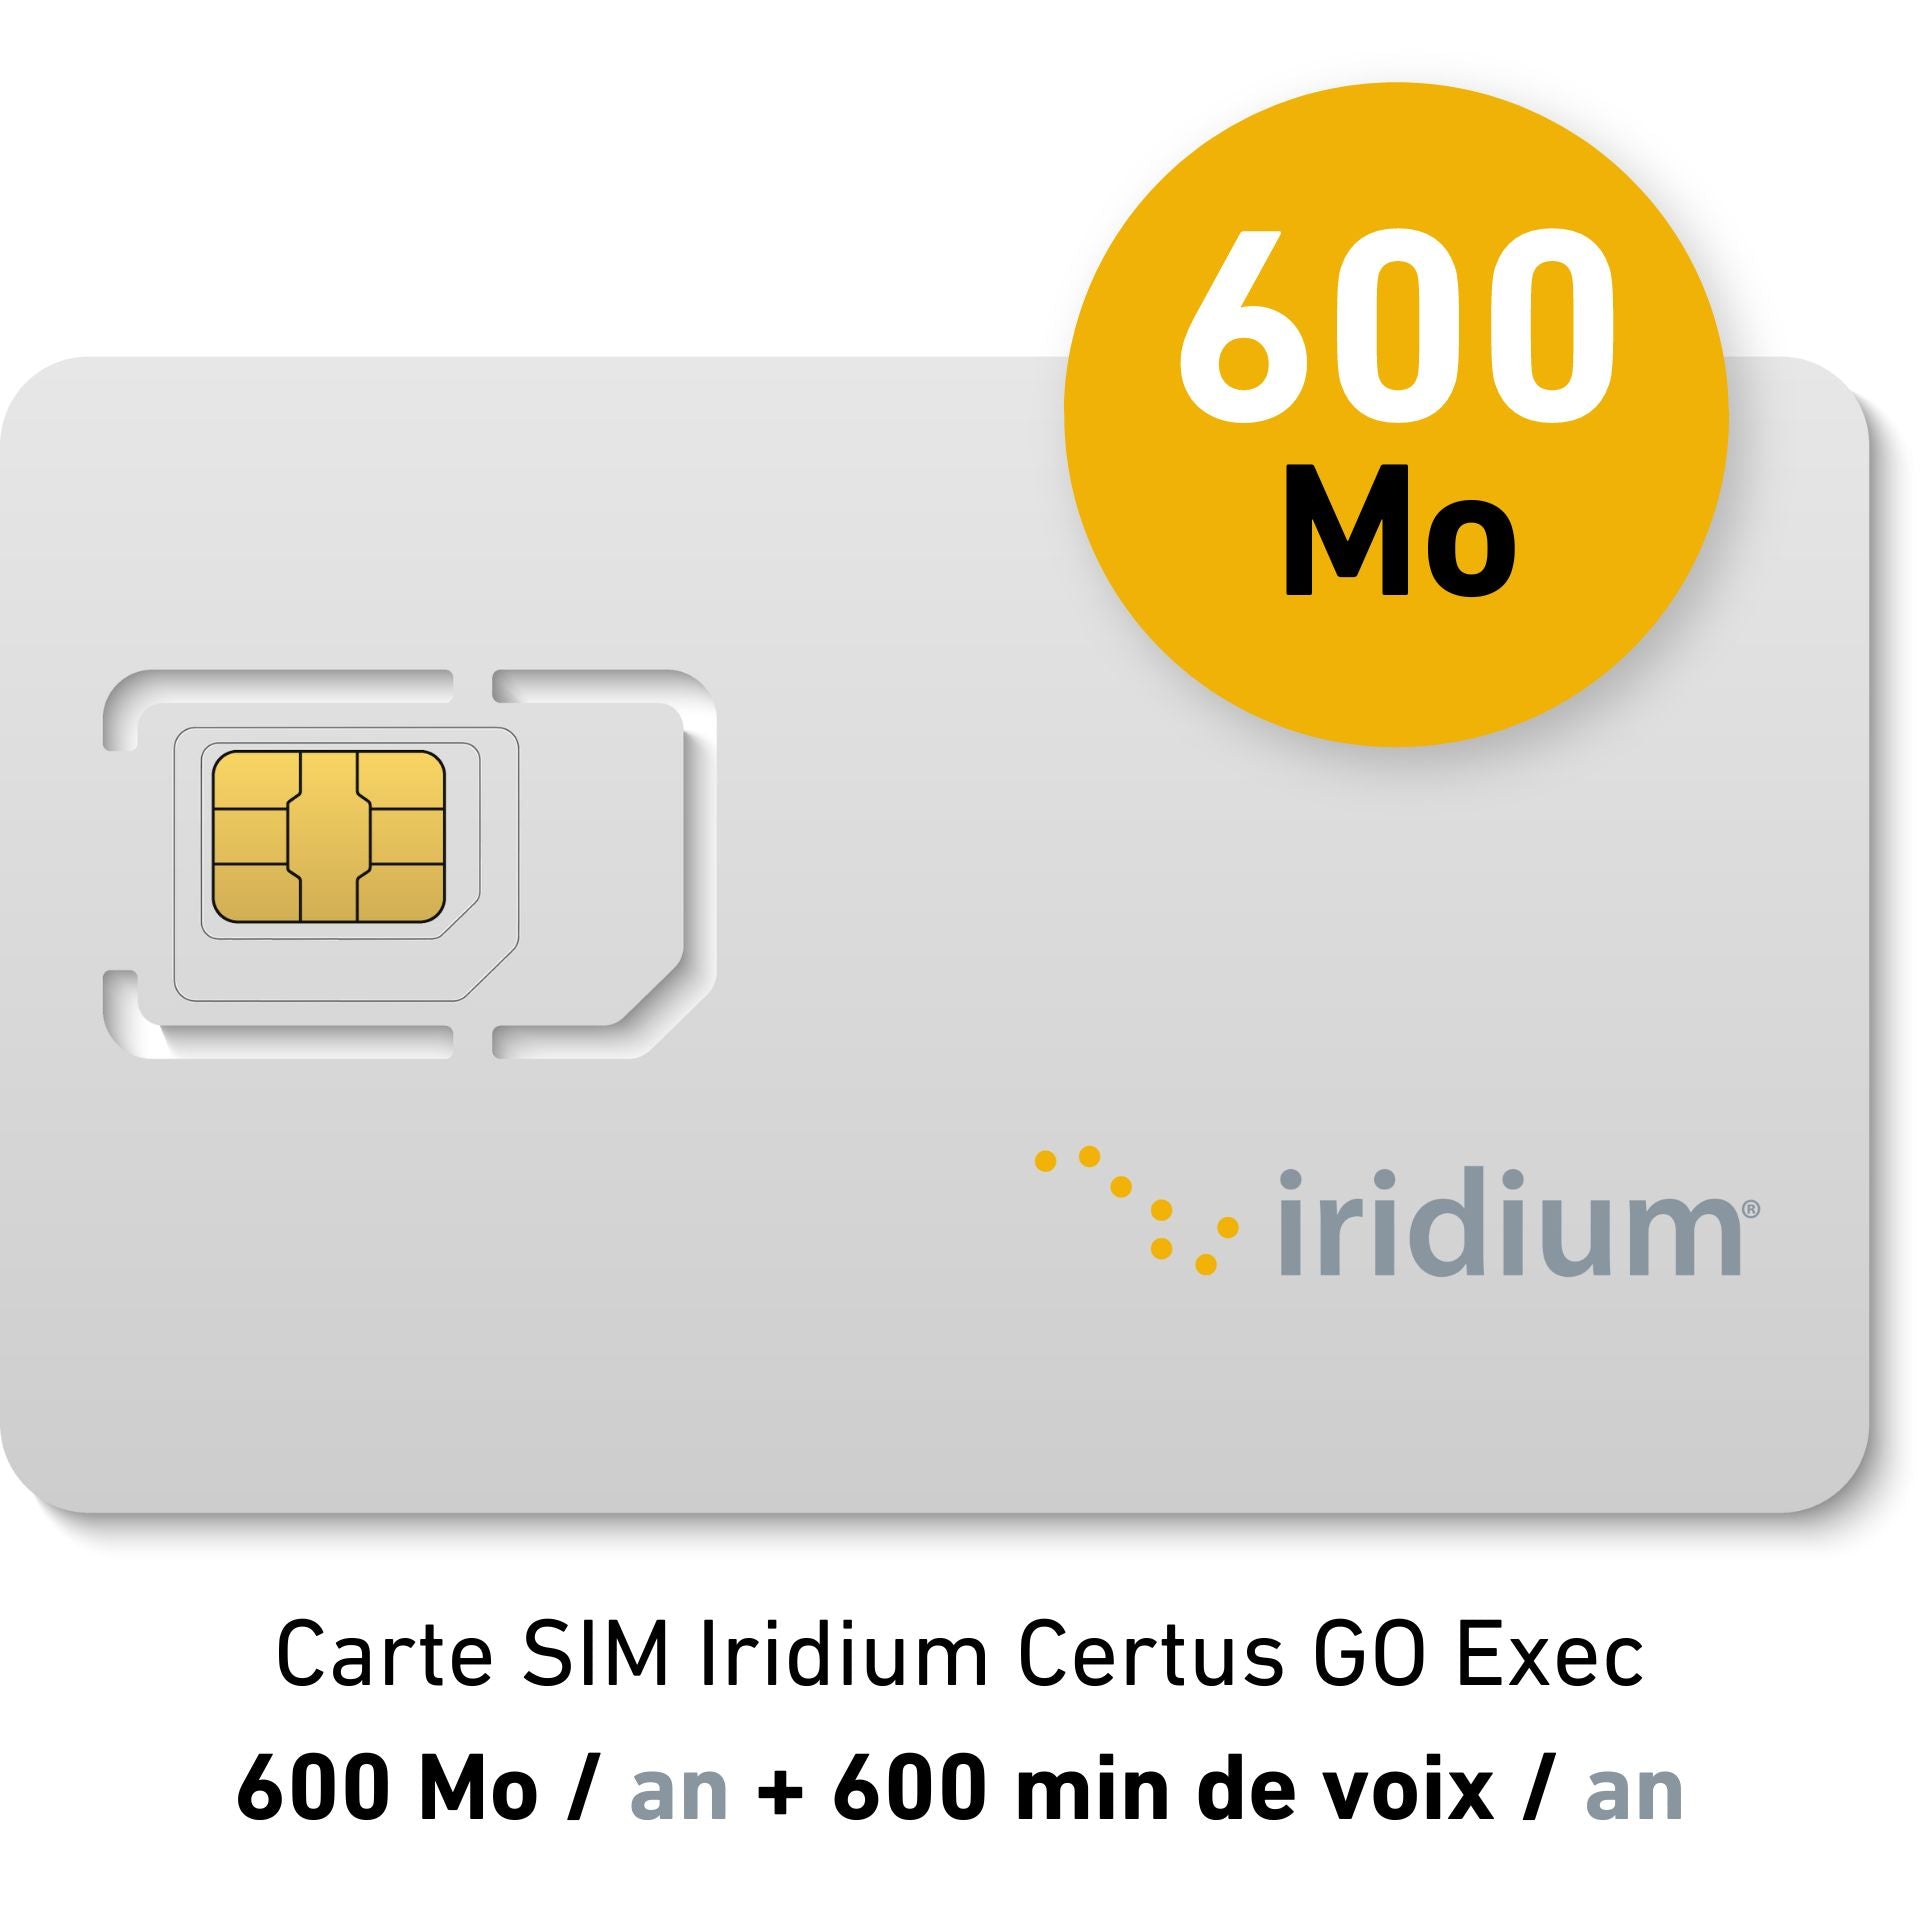 Iridium Certus GO Exec - 600MB/Jahr -Doppelte Daten + 600Min. Sprachanrufe/Jahr